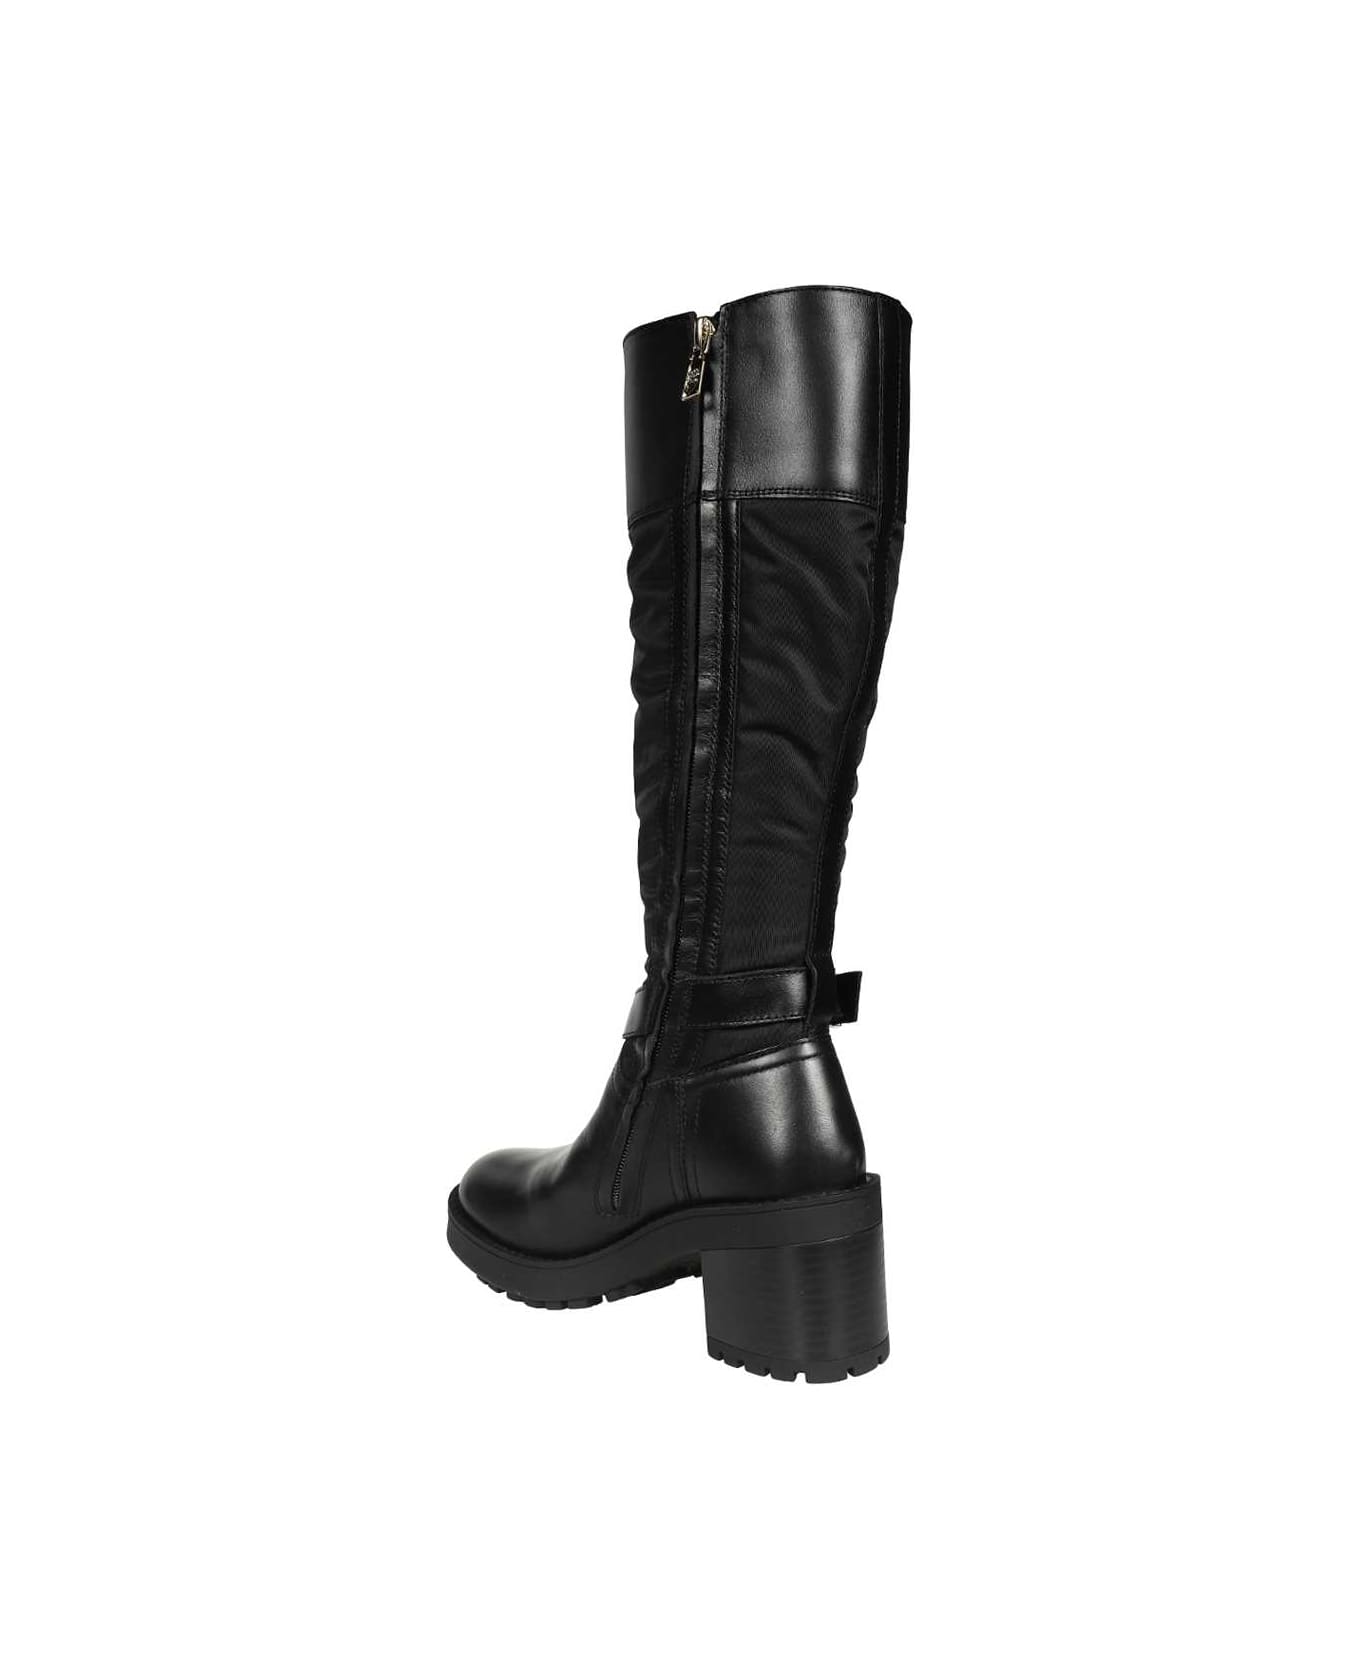 Love Moschino Knee-boots - black ブーツ